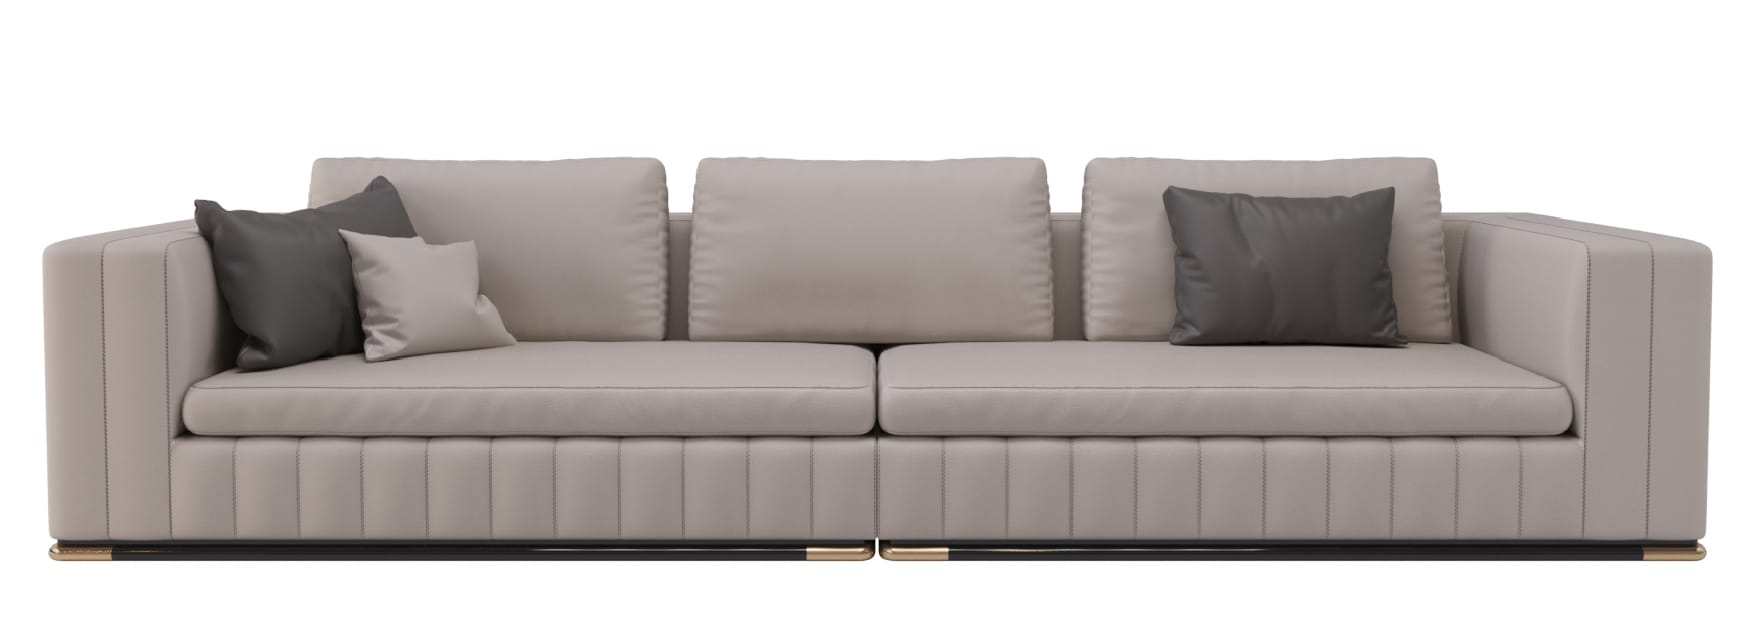 Italian modern couch